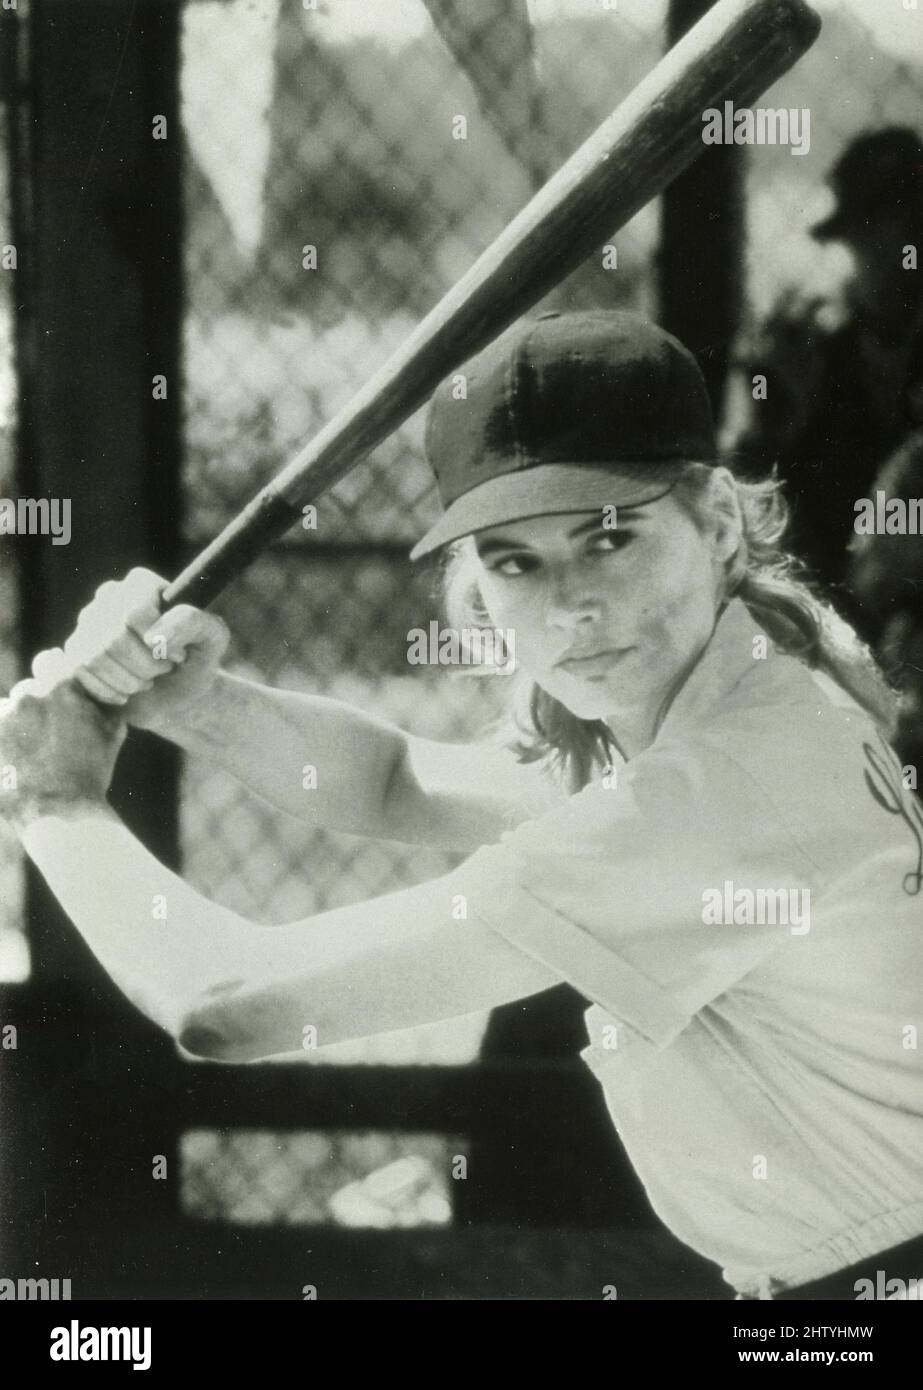 L'attrice americana Geena Davis nel film A League of own, USA 1992 Foto Stock